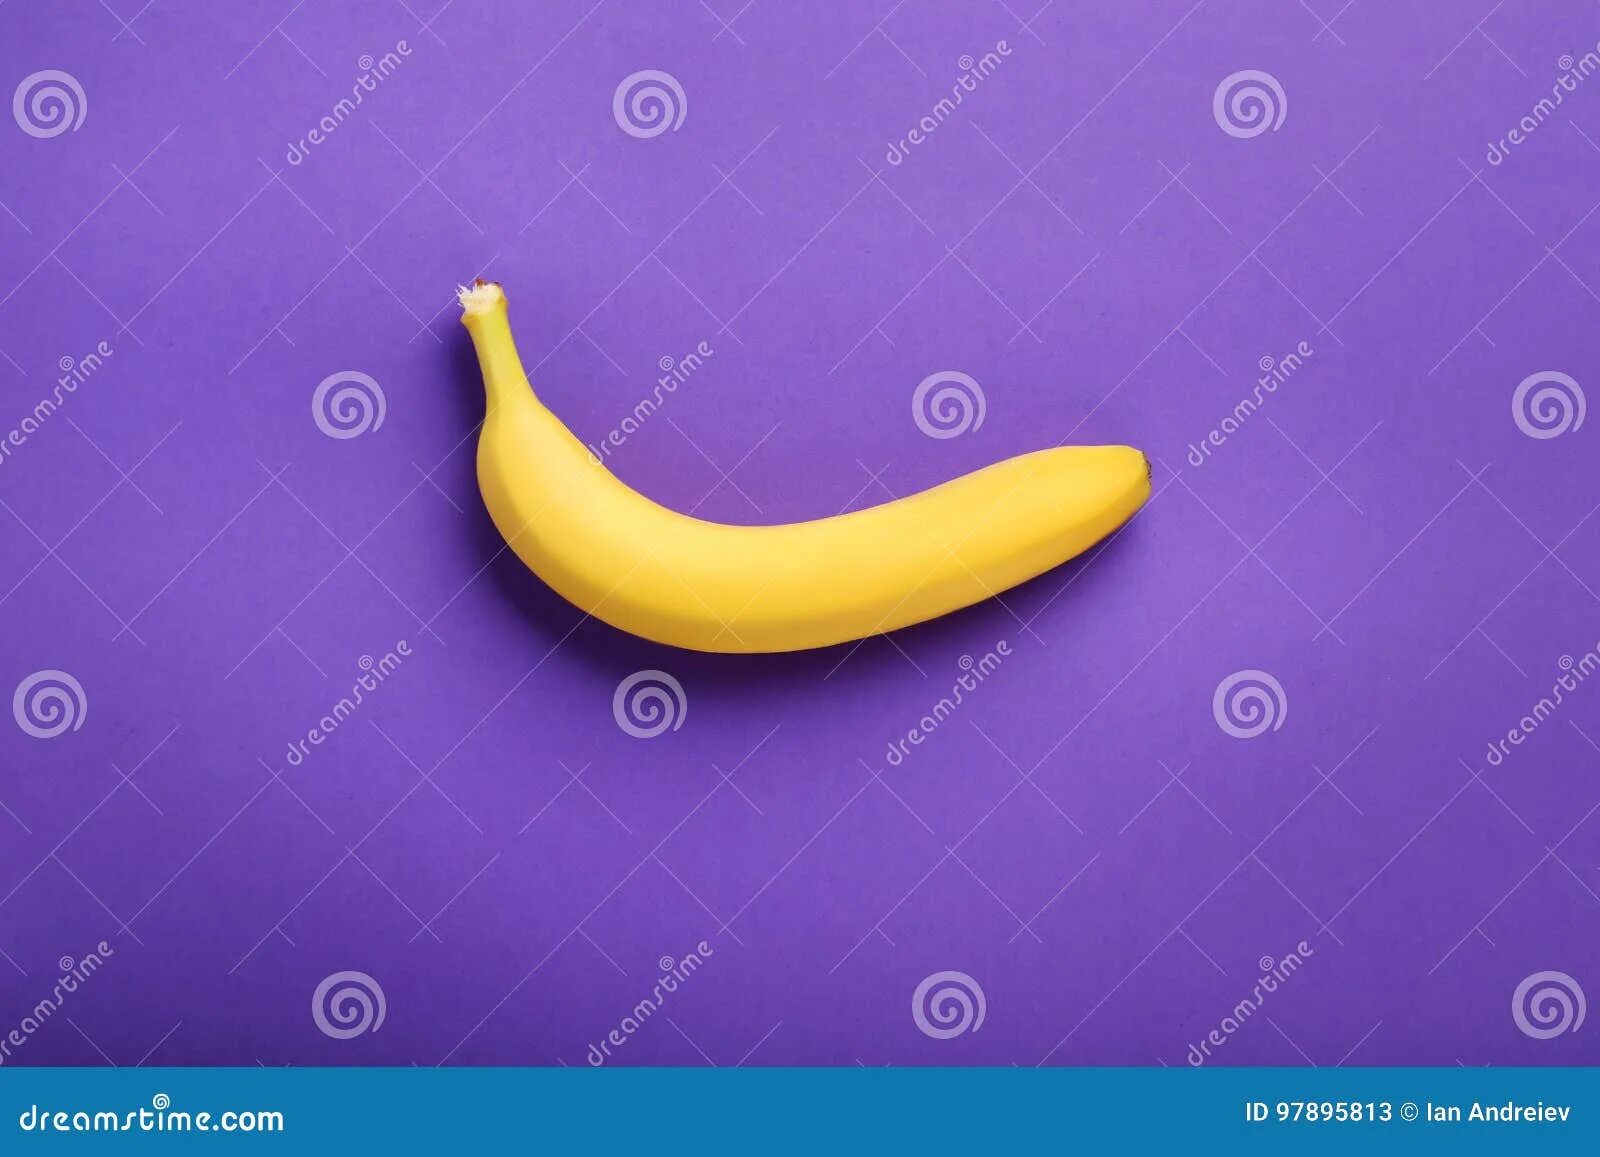 Фиолетовый банан. Банан на фиолетовом фоне. Сиреневый банан. Сладкий банан. Свит банана